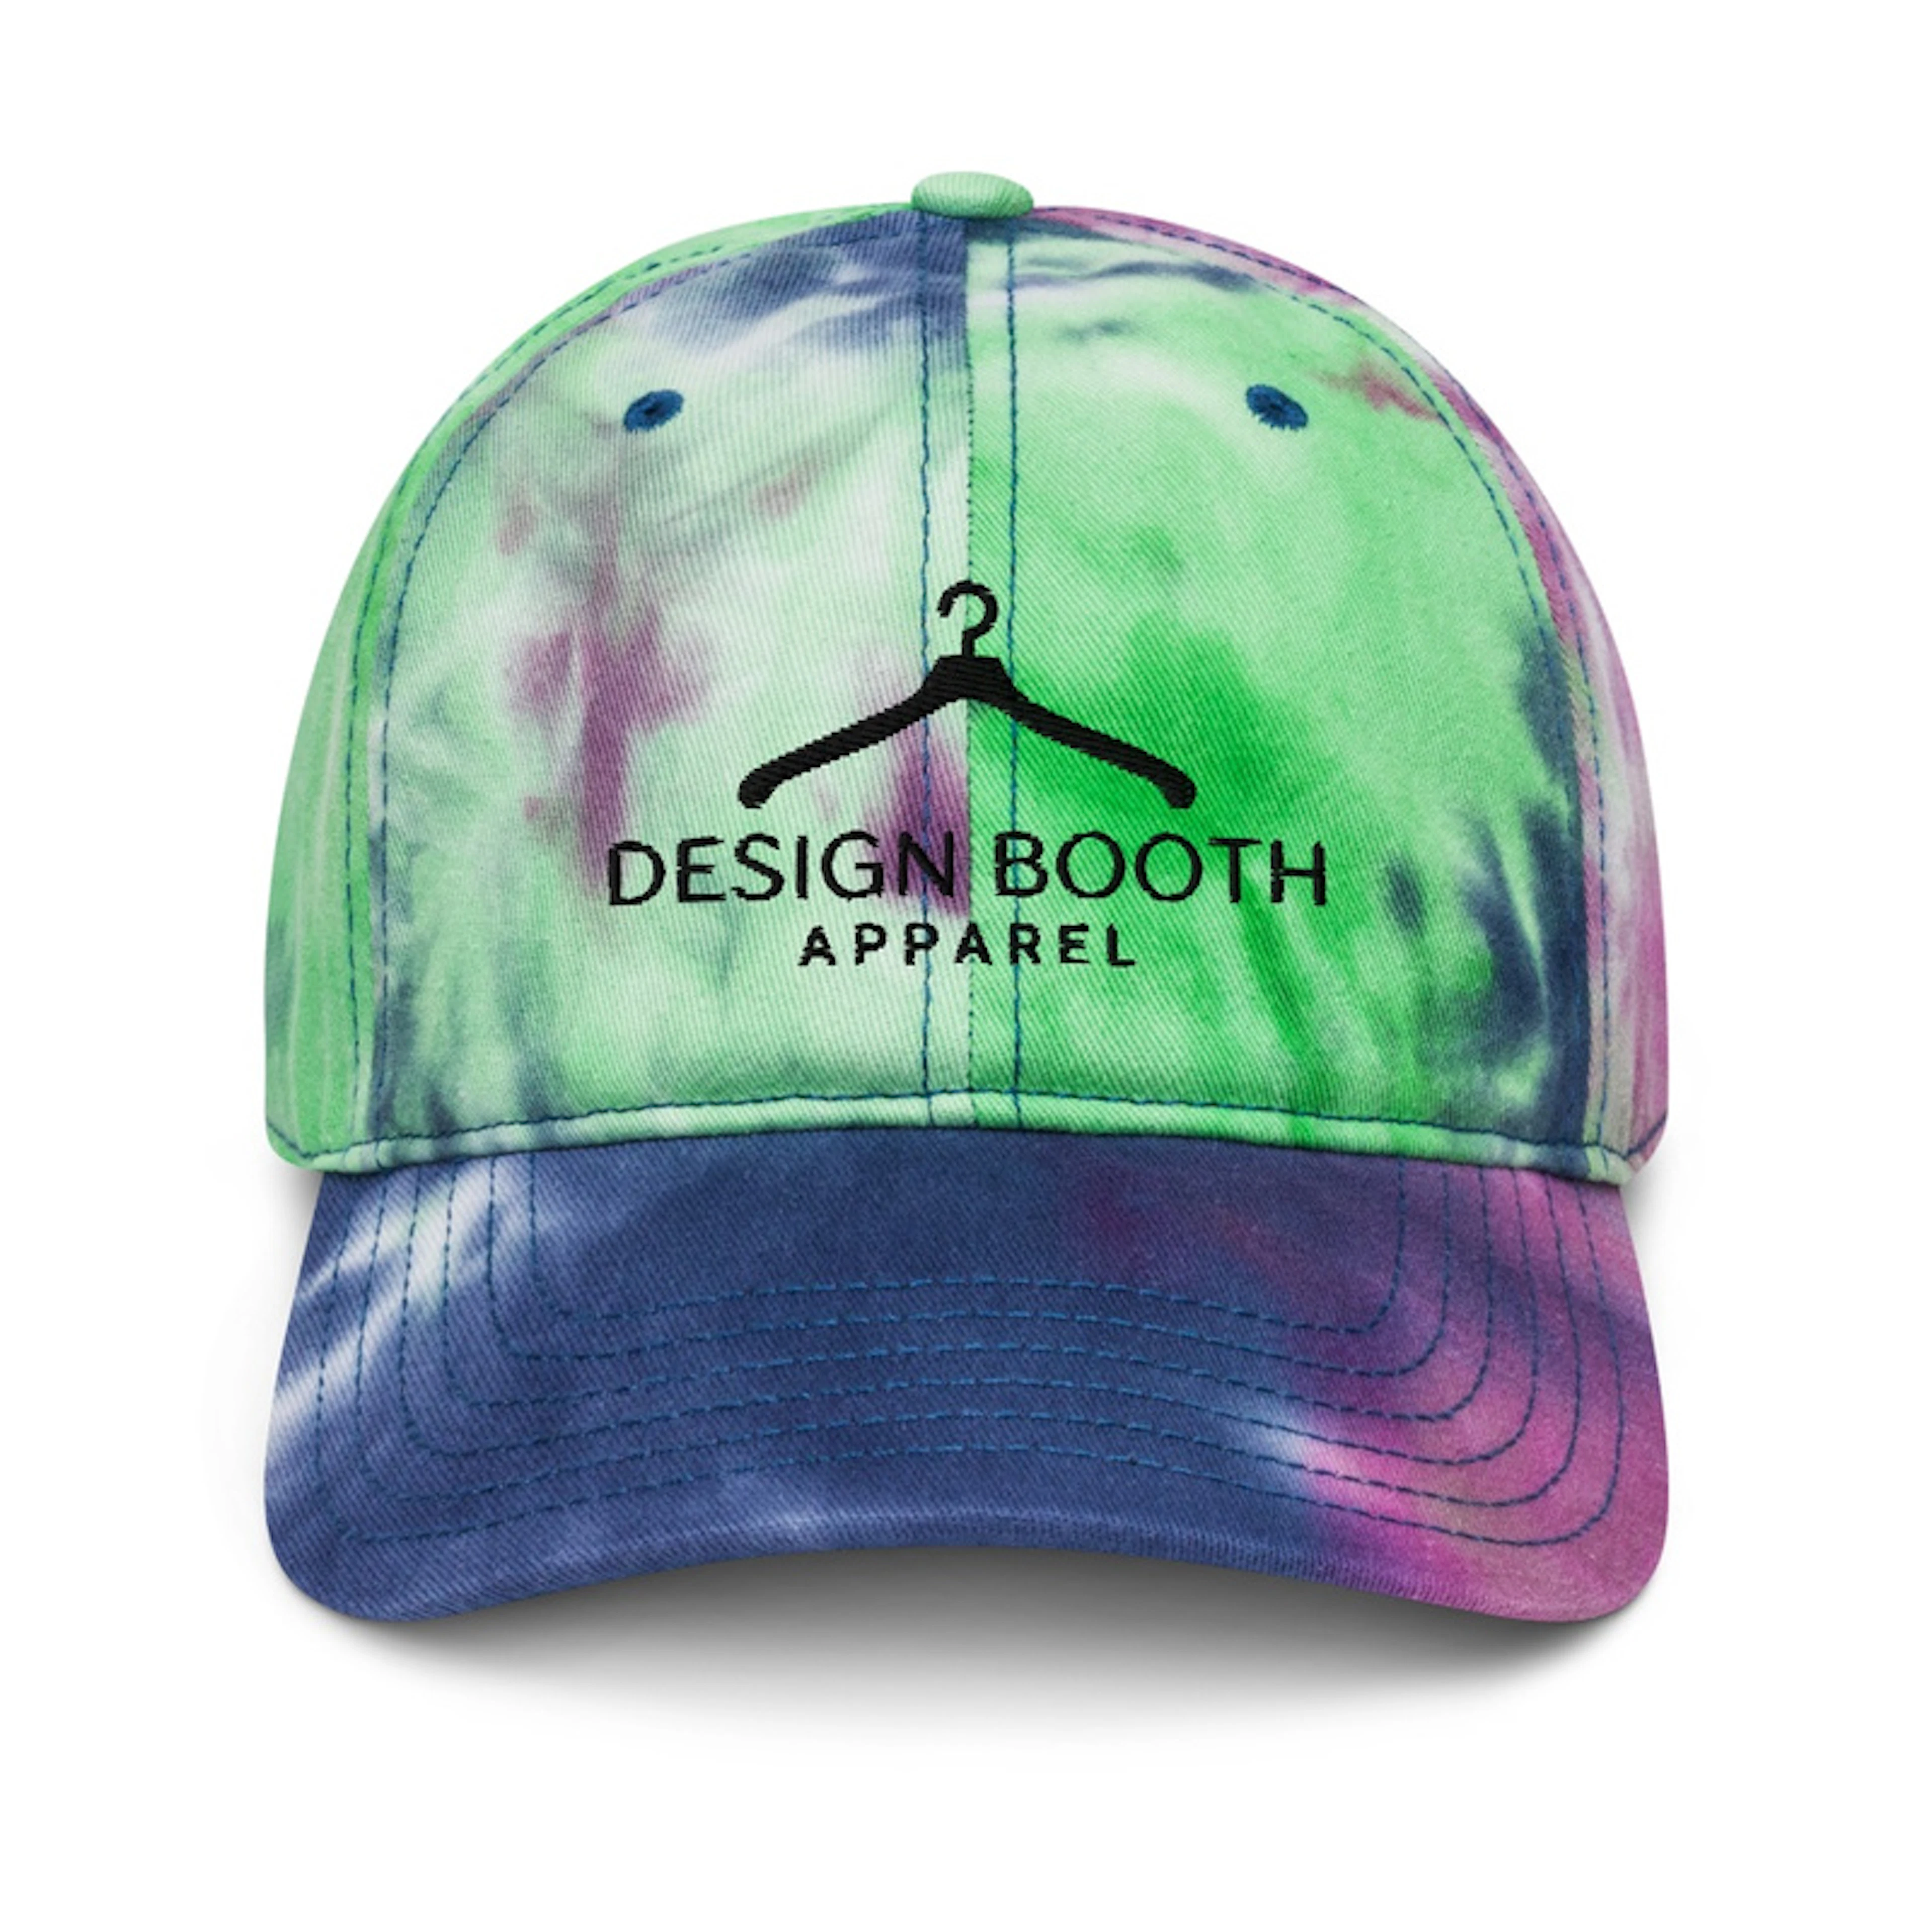 Design Booth Apparel Tie Dye Hat